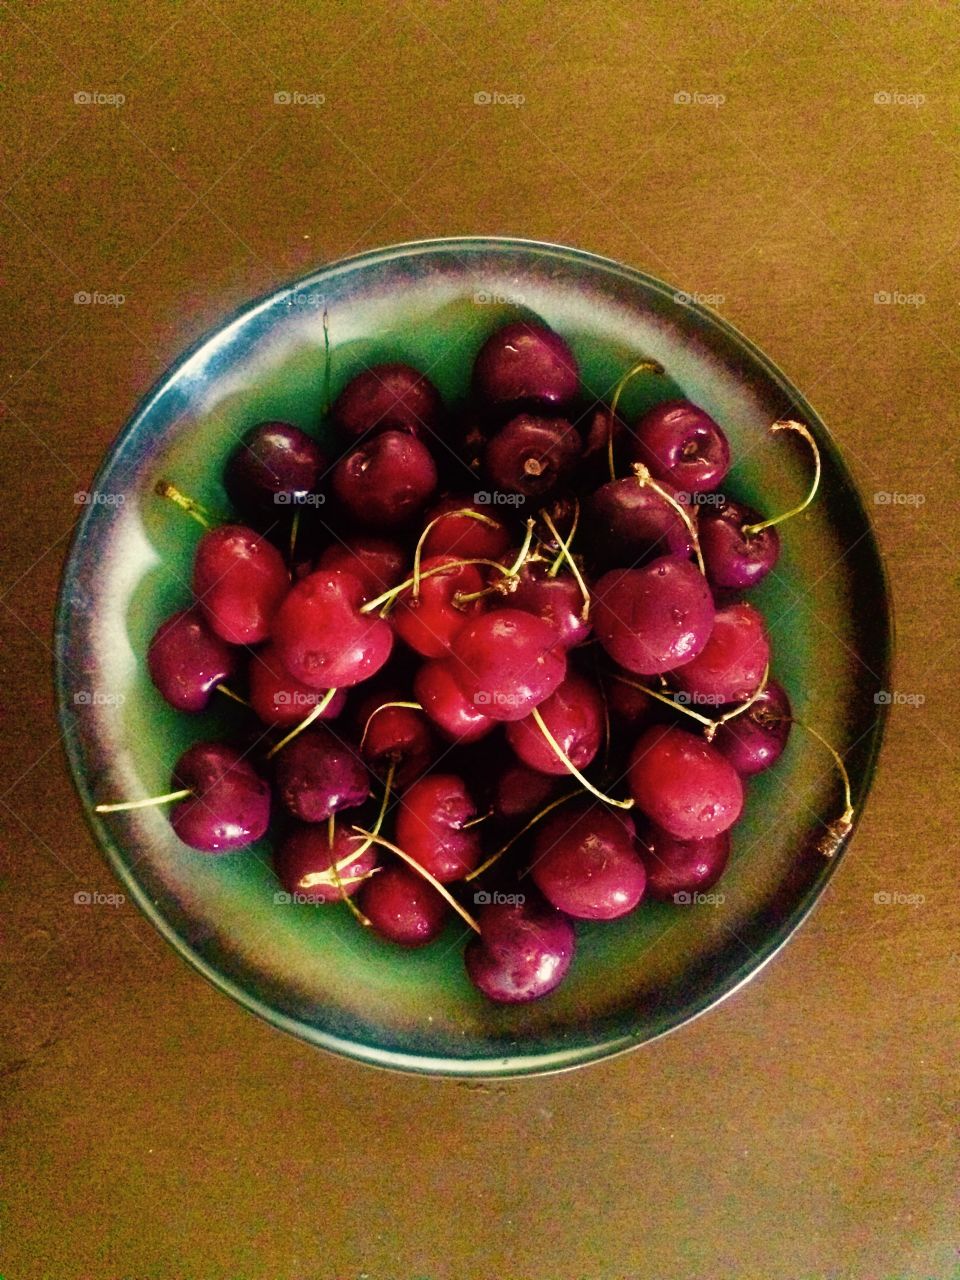 Cherry love 